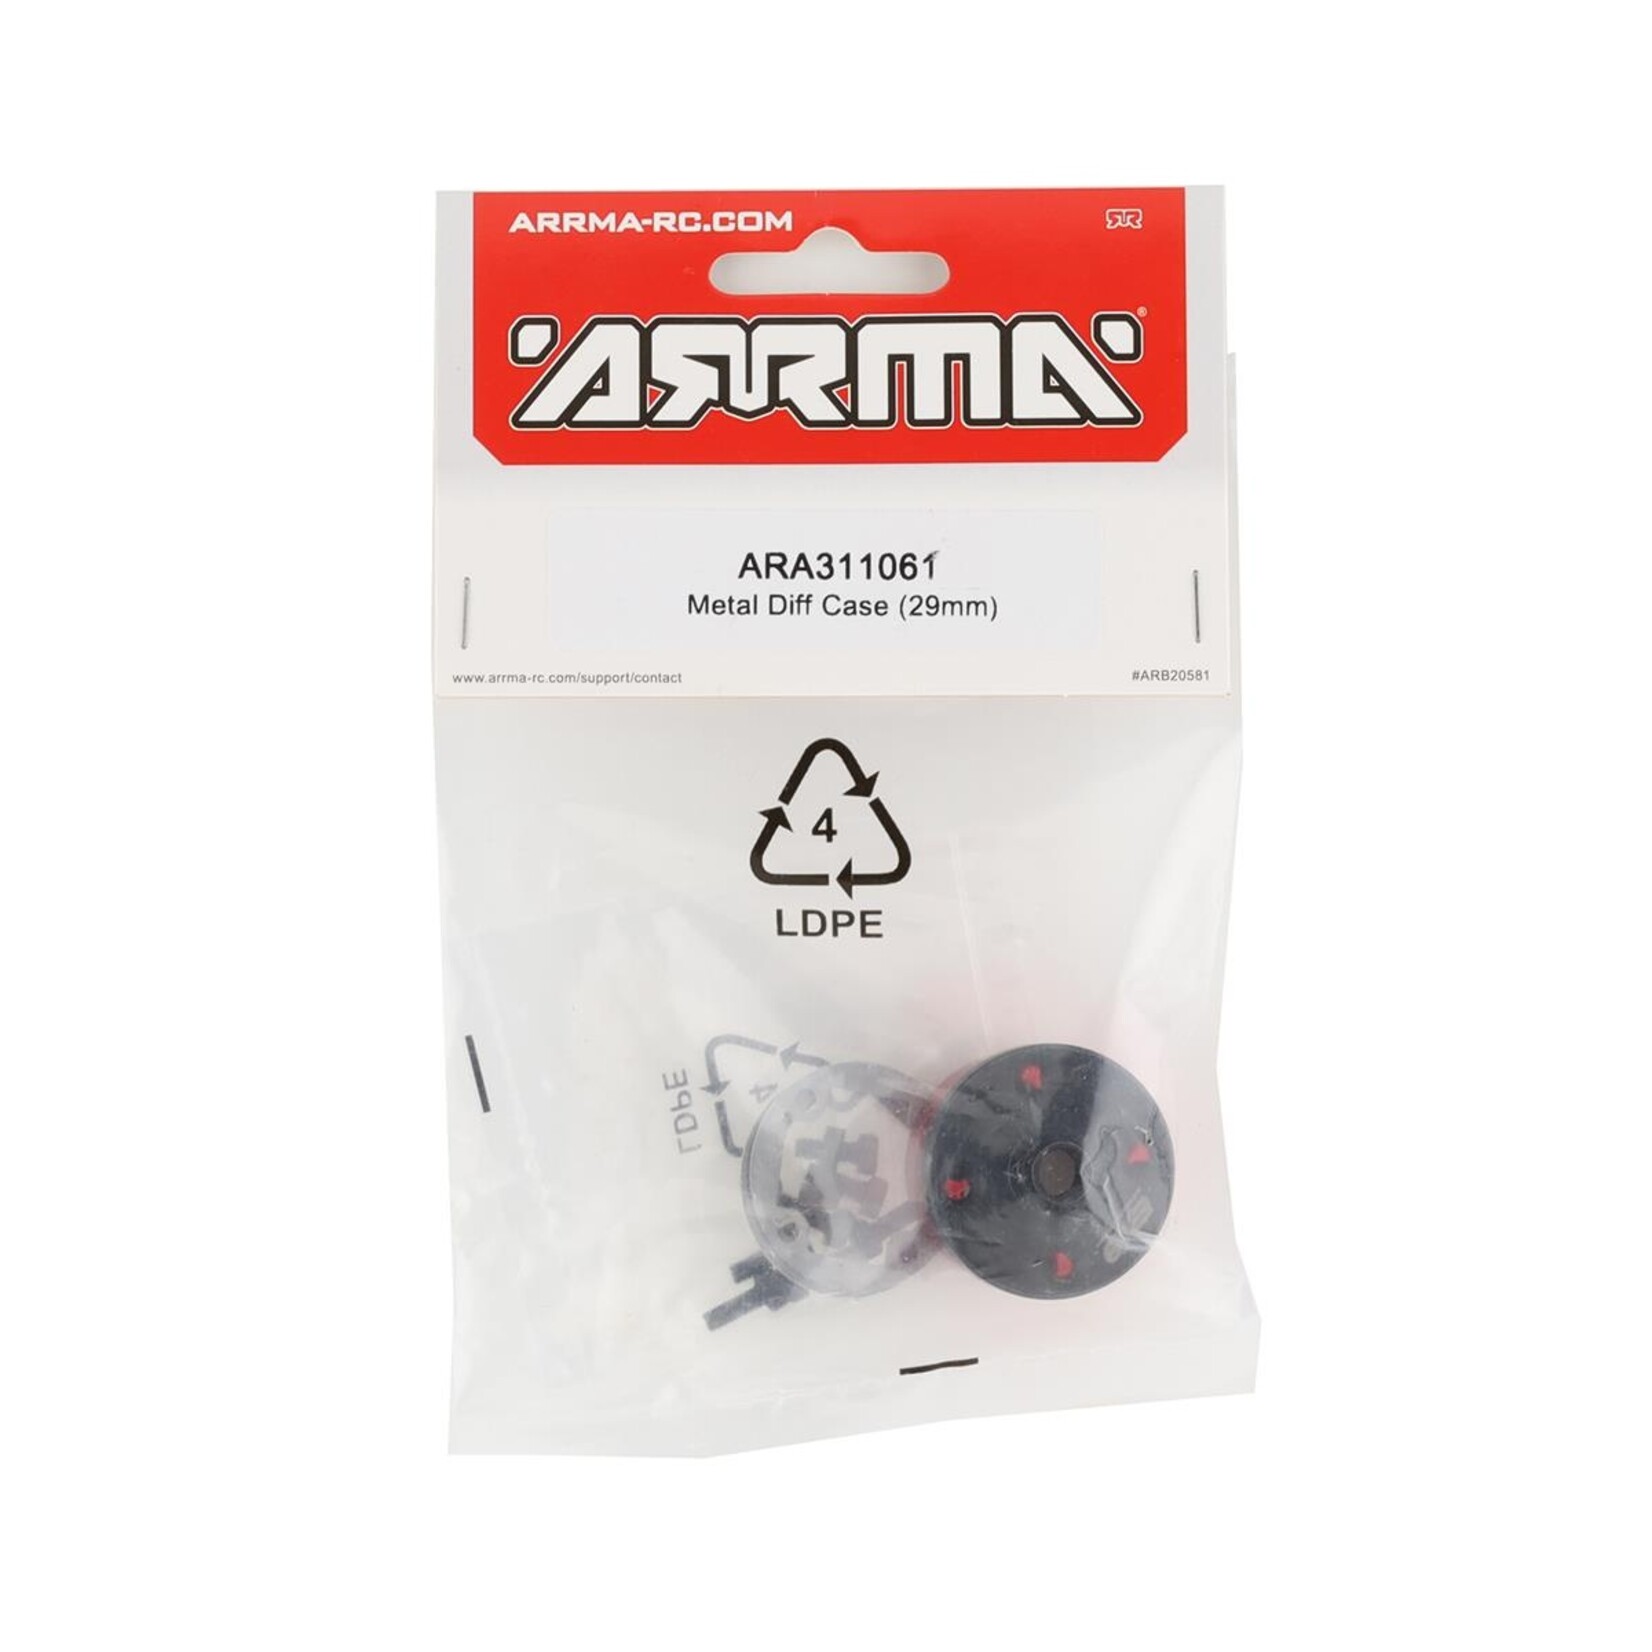 ARRMA Arrma Kraton/Mojave 6S BLX Metal Differential Case (29mm) #ARA311061